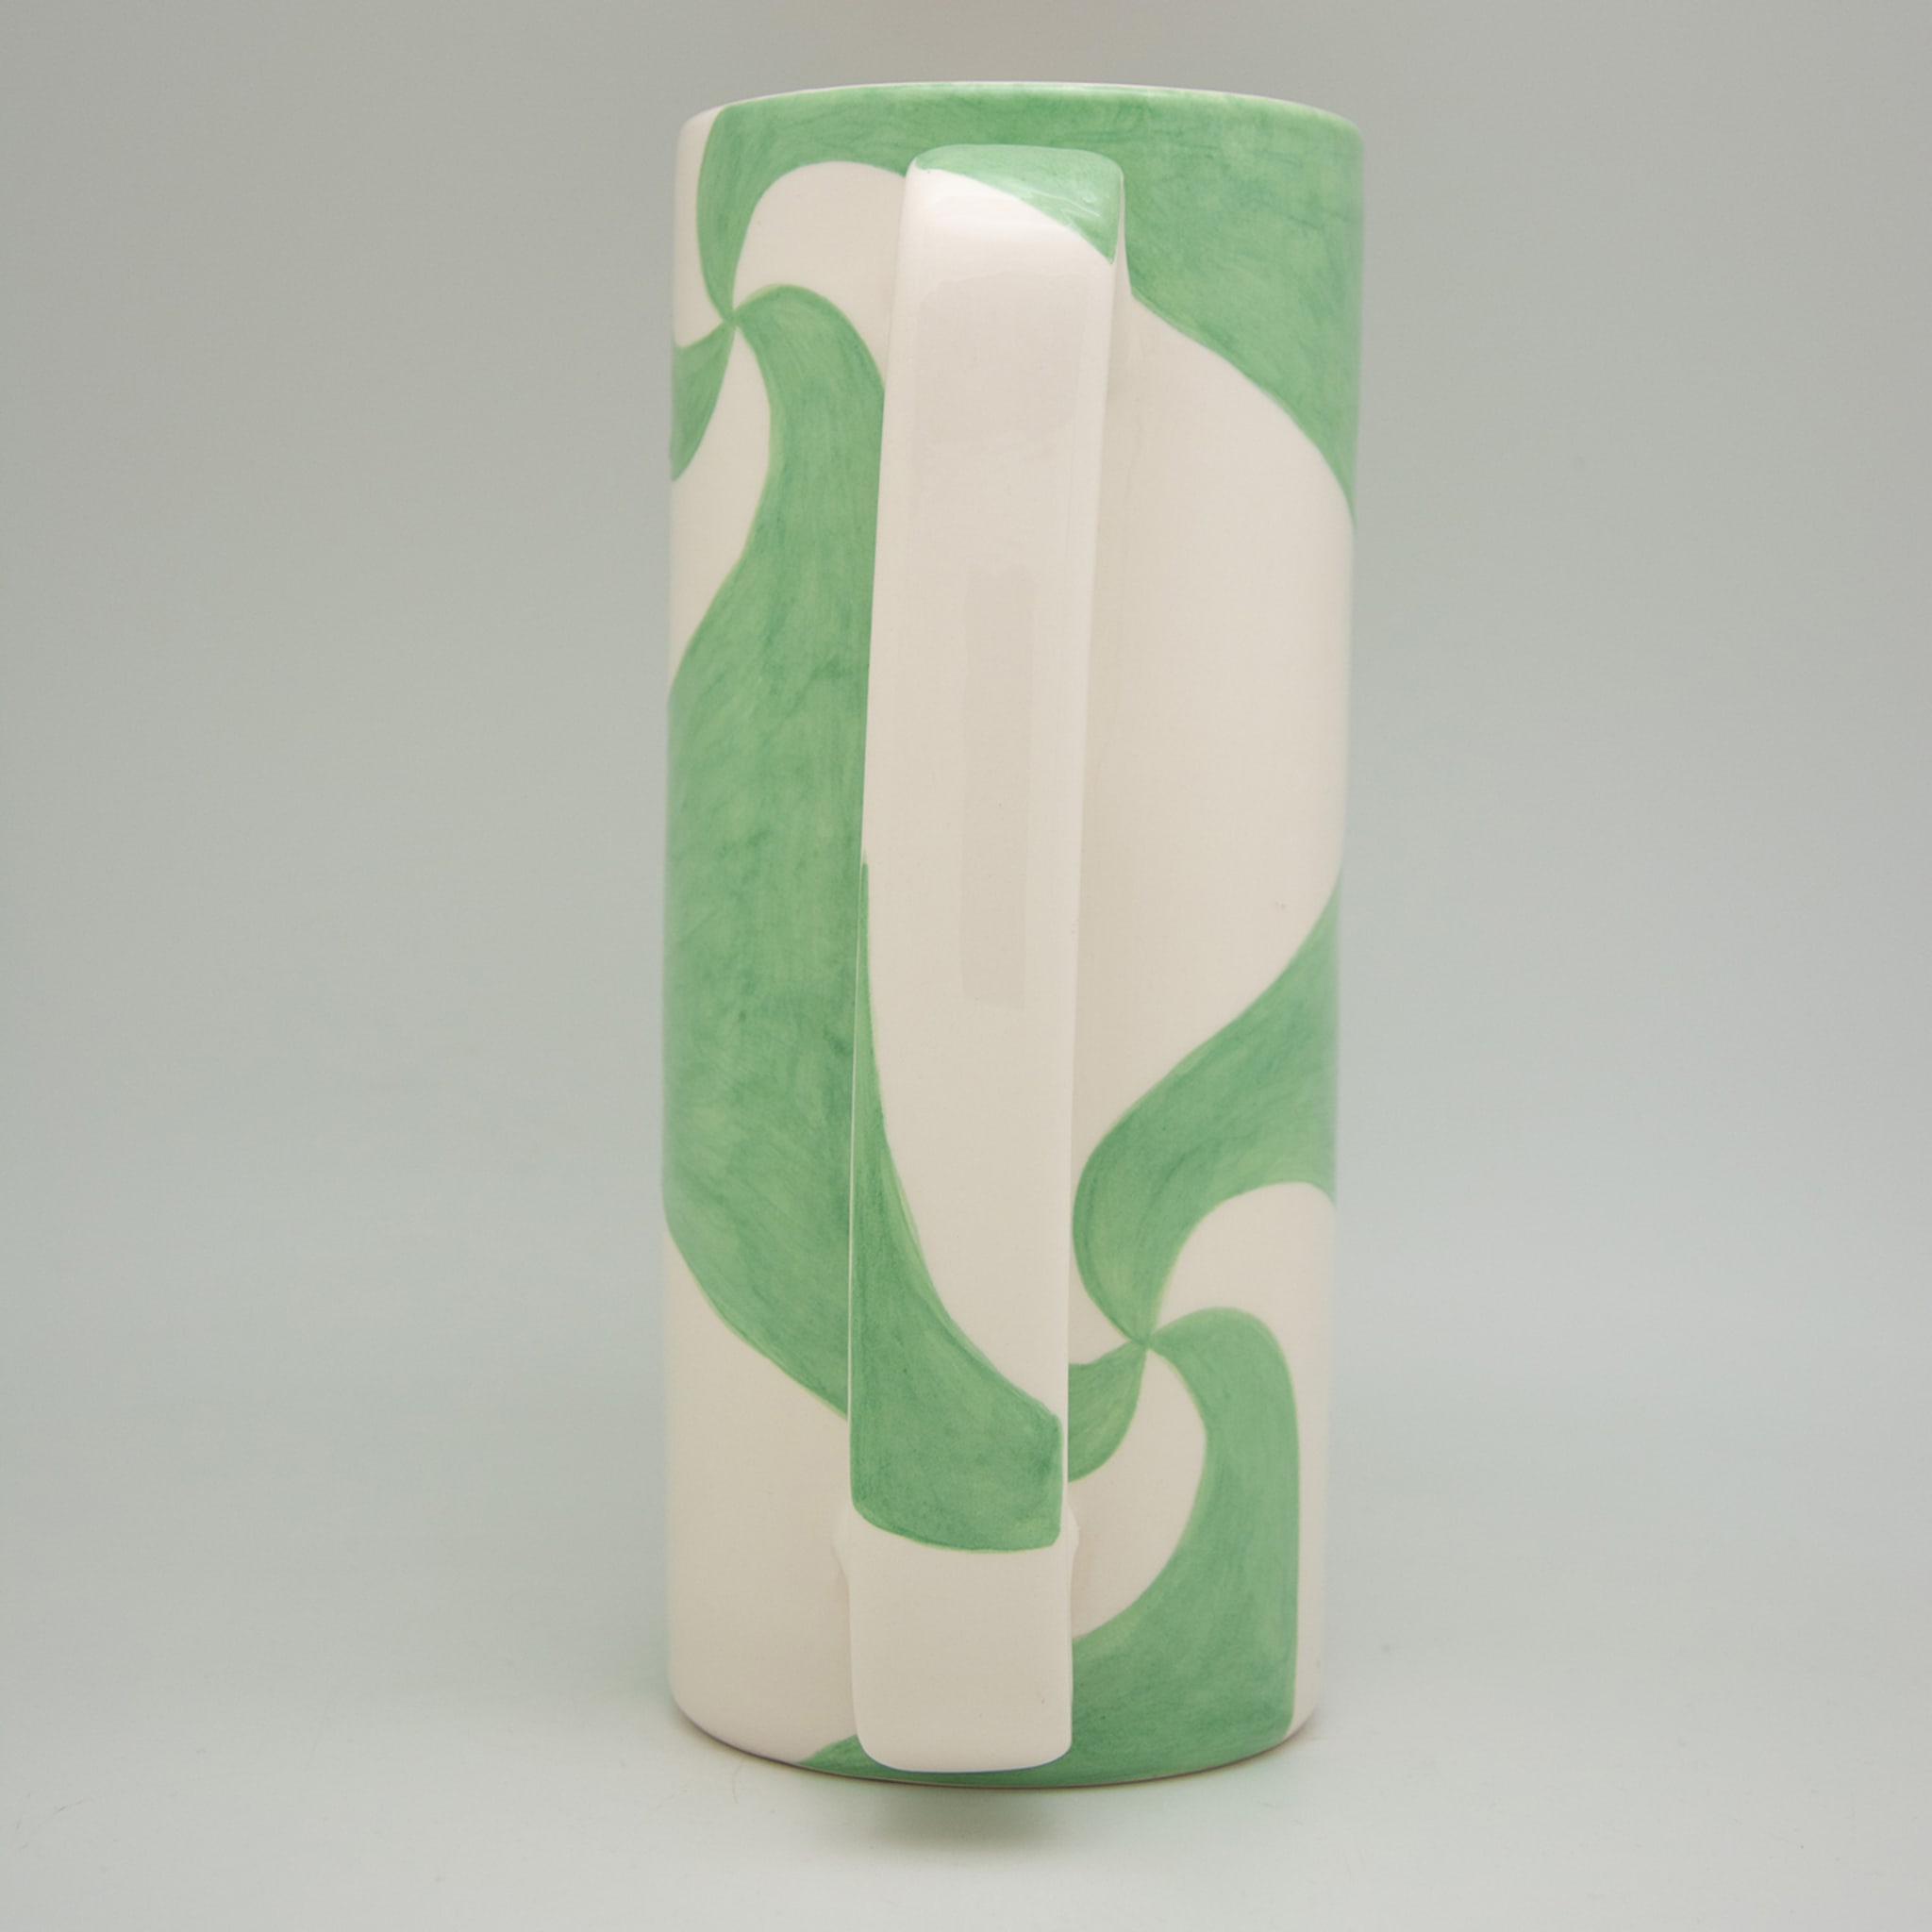 Serlio Green Atellani Ceramic Carafe  - Alternative view 2